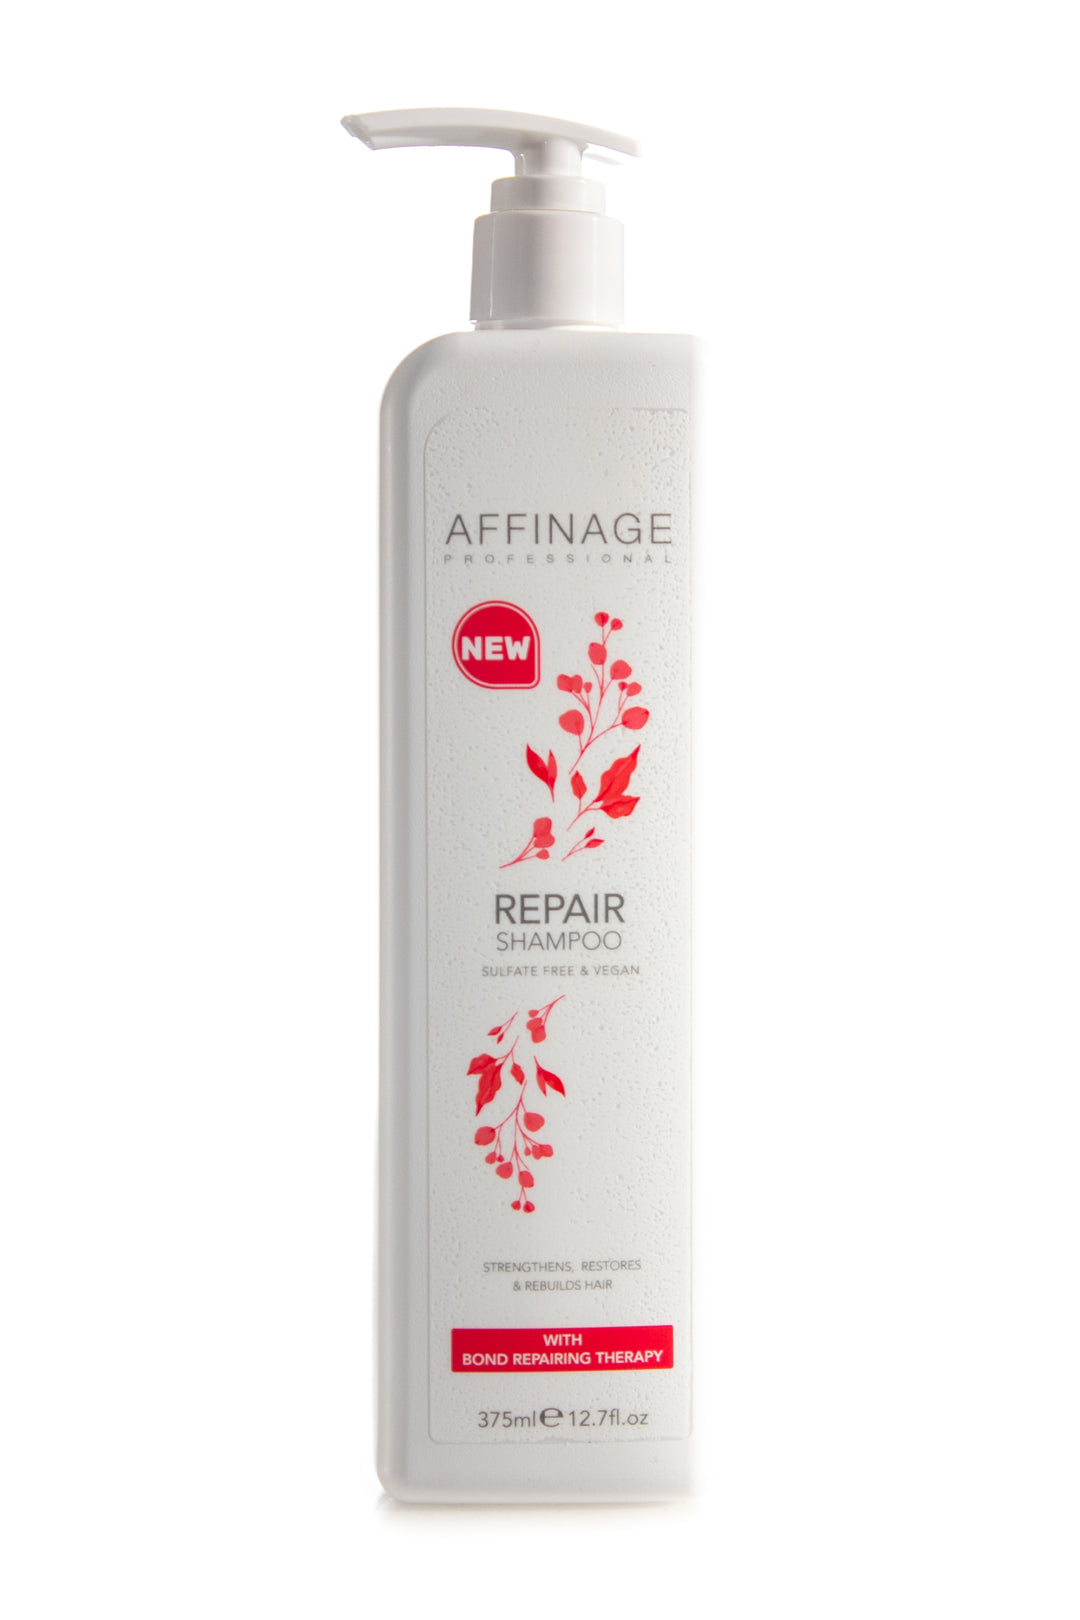 affinage-repair-shampoo-375ml